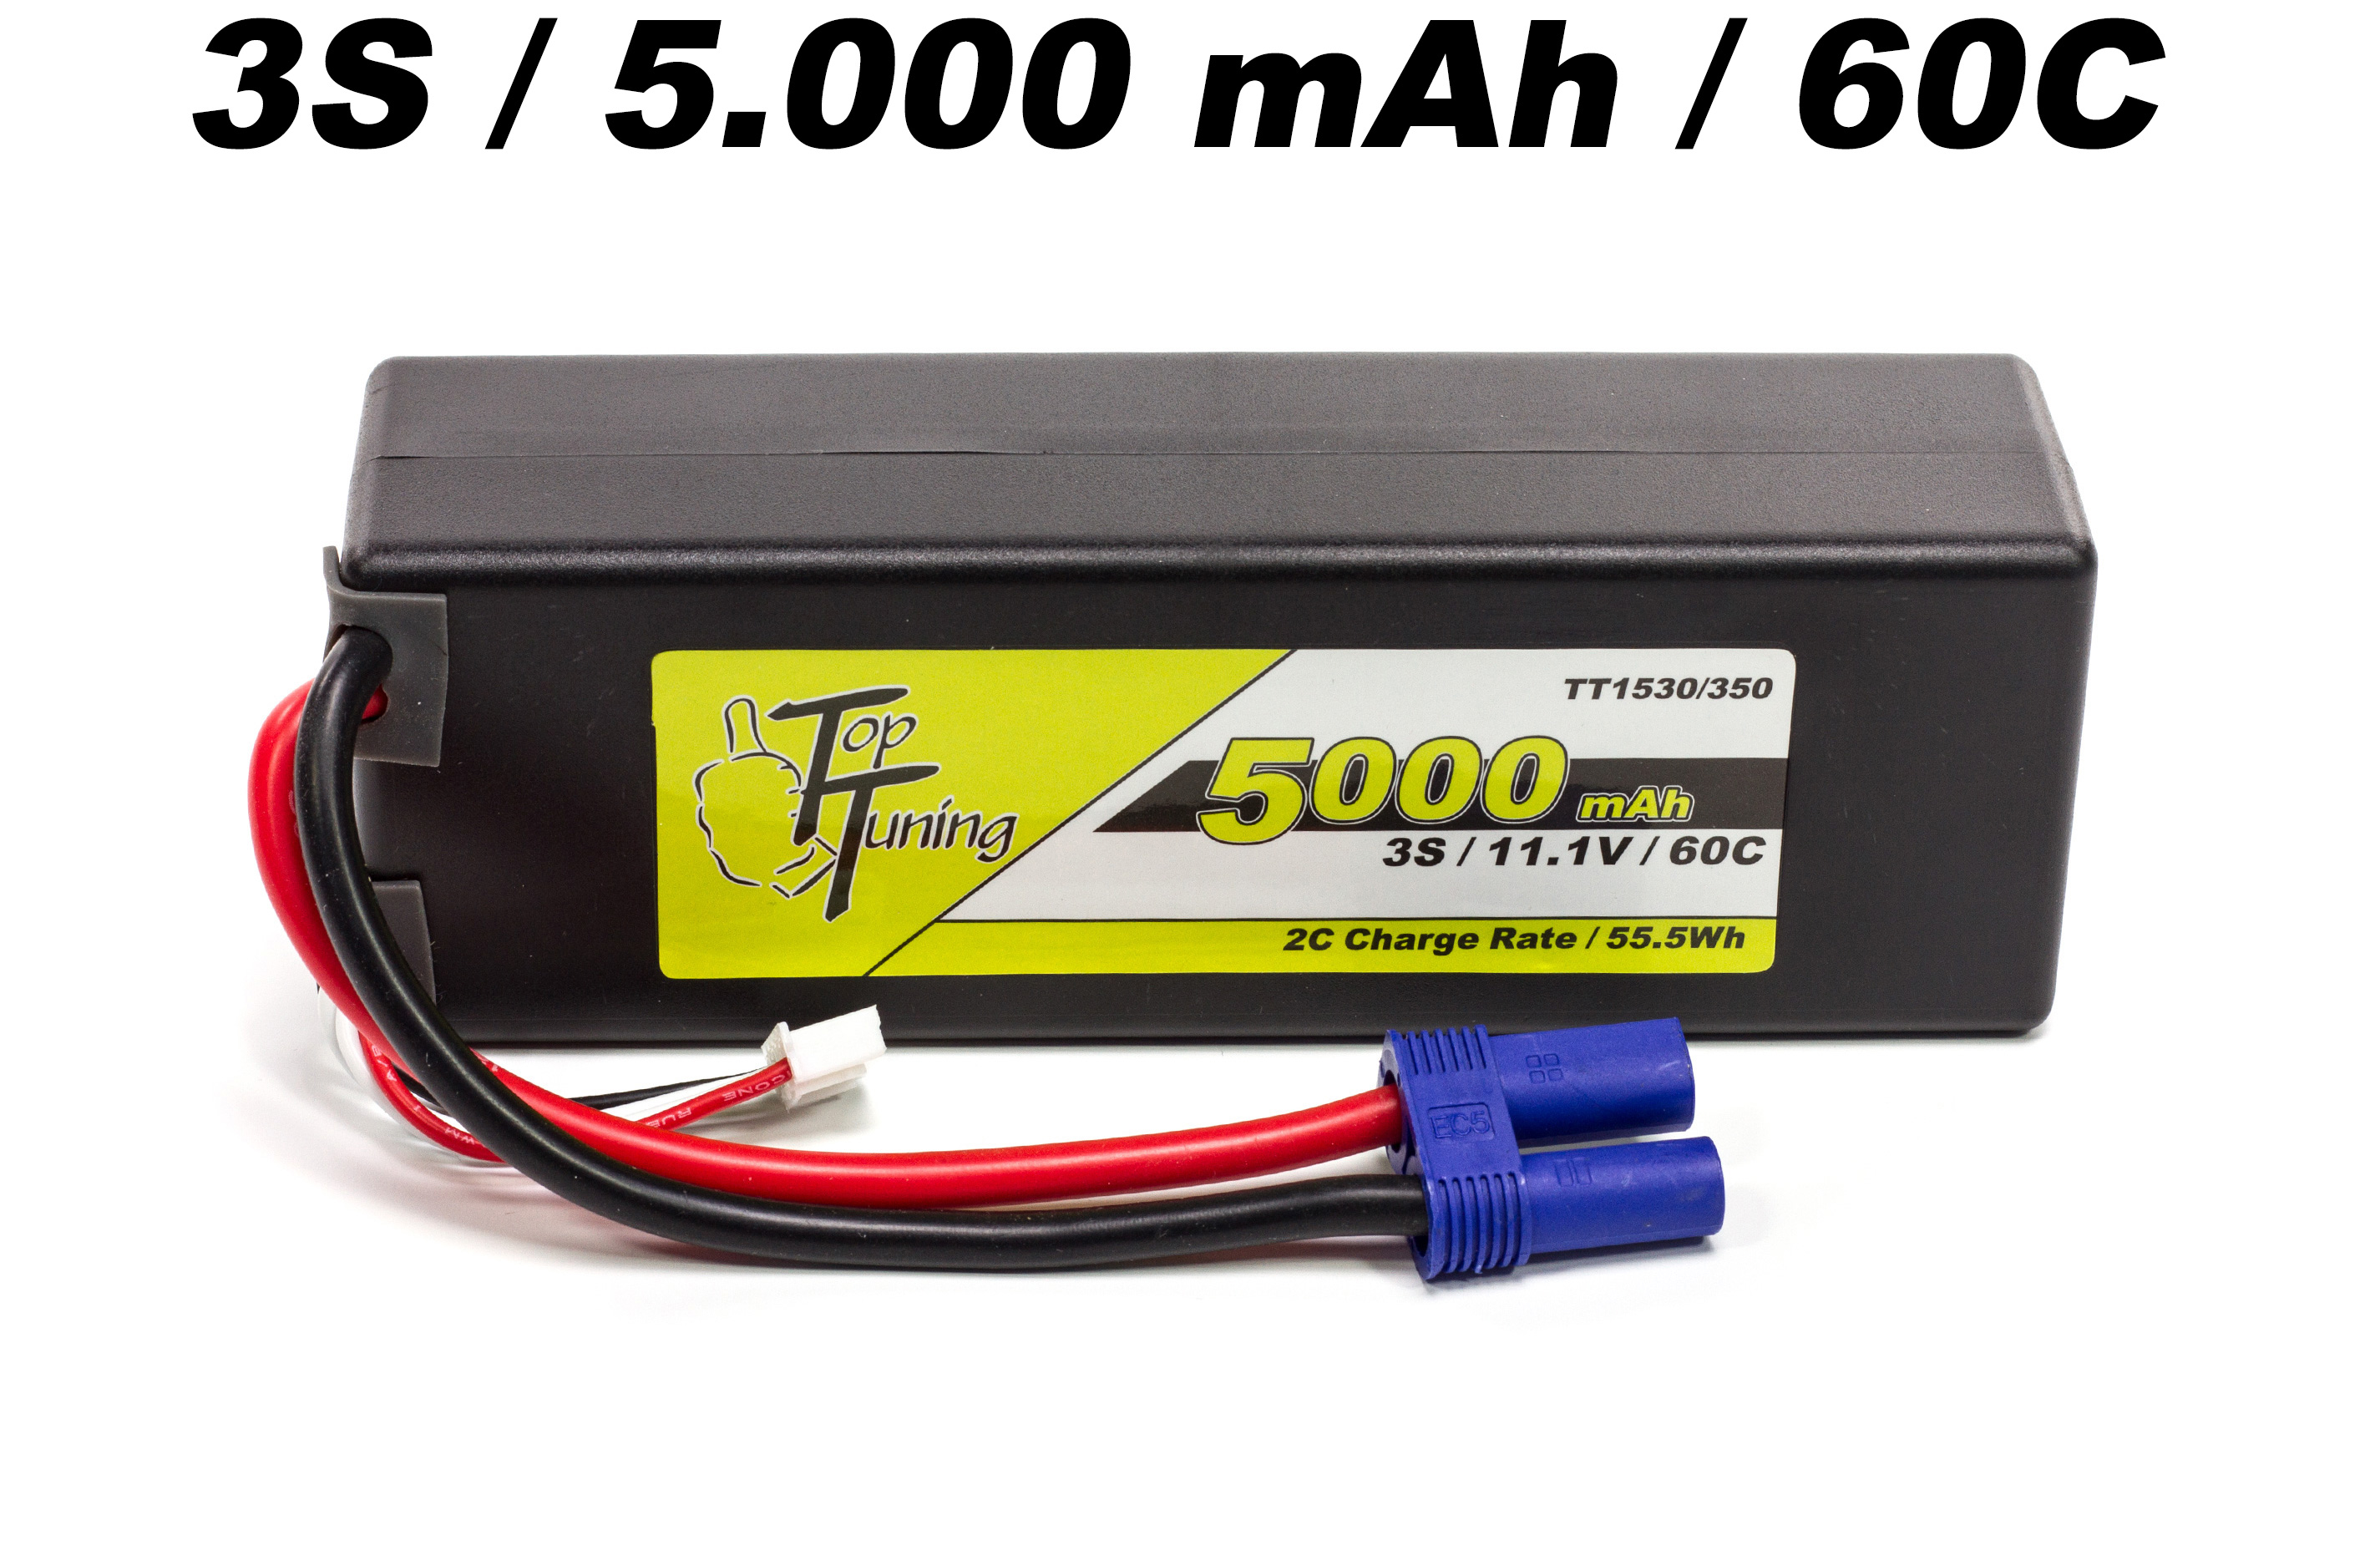 TT1530/350 Top Tuning 5000 mAh LiPo battery 3S, 11,1V 60C Offer